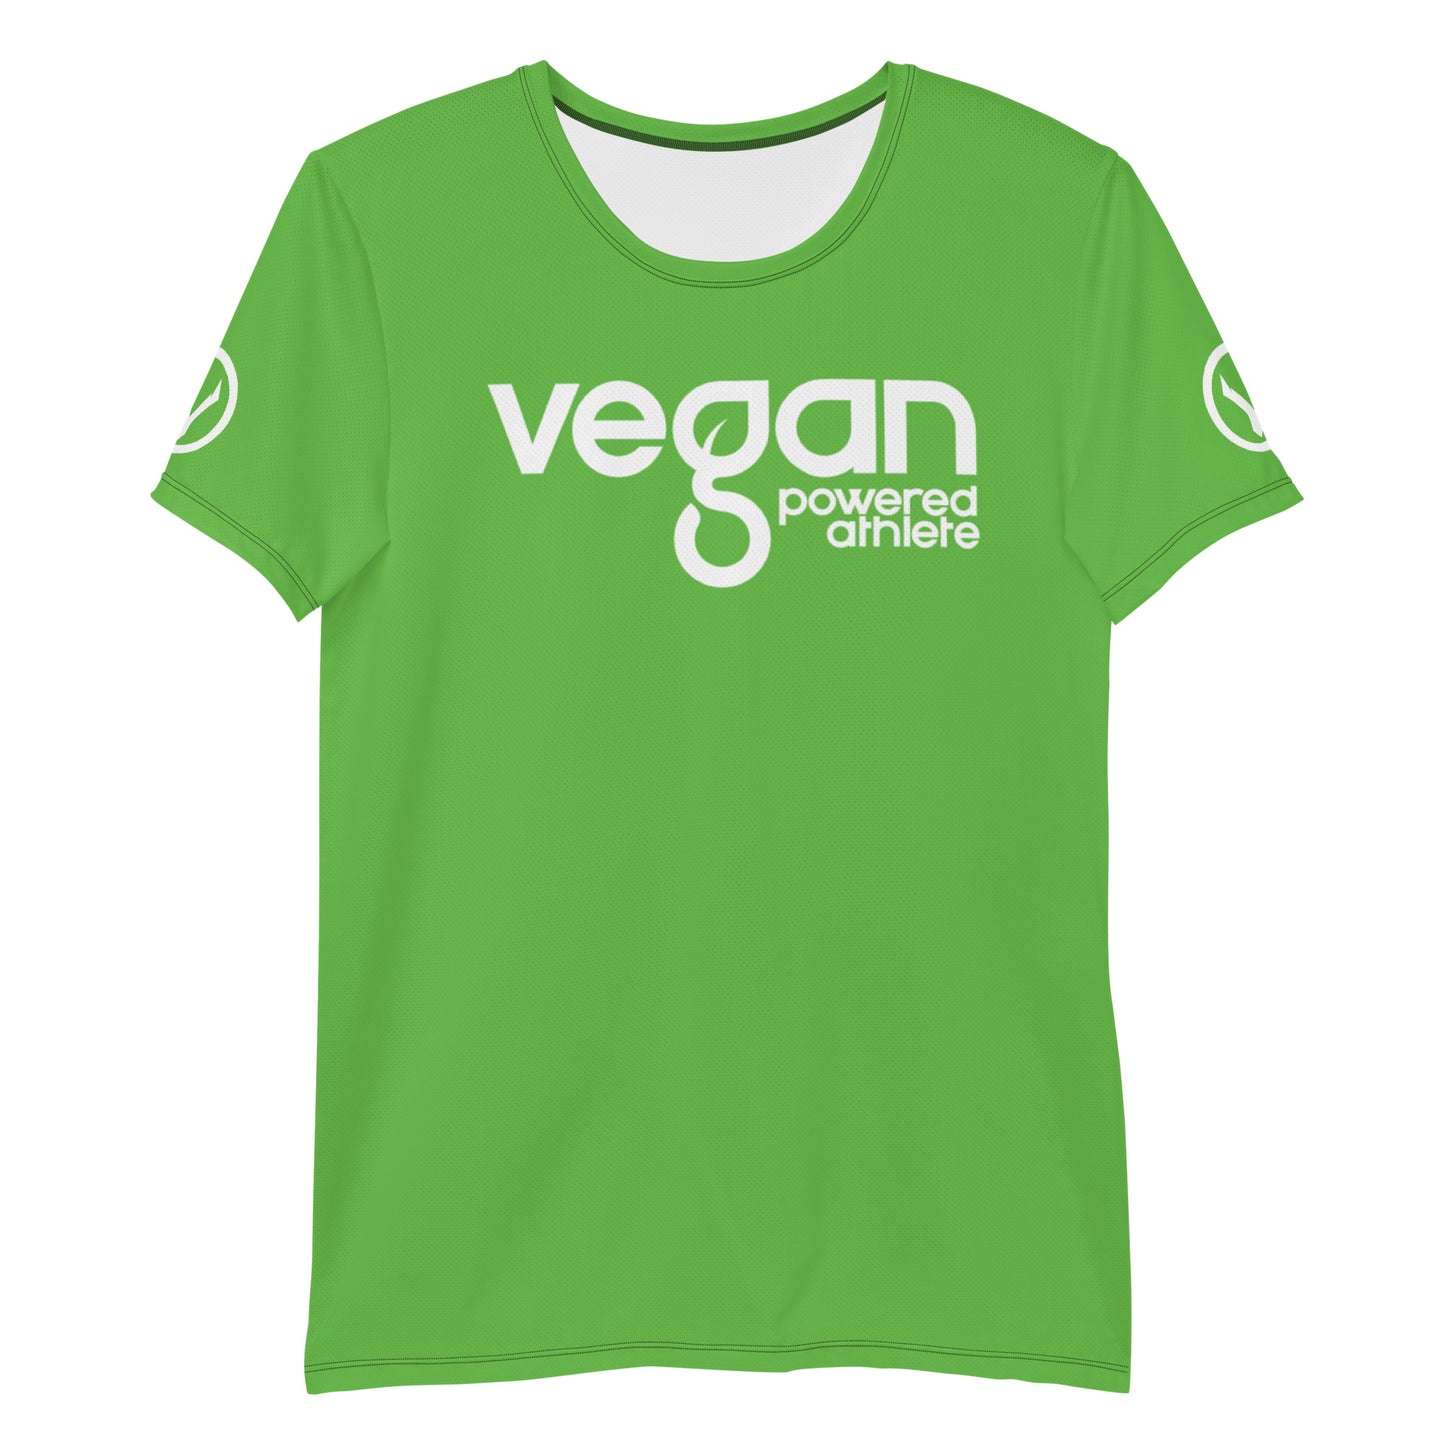 Vegan Powered Athlete Moisture Management Men's Athletic T-shirt